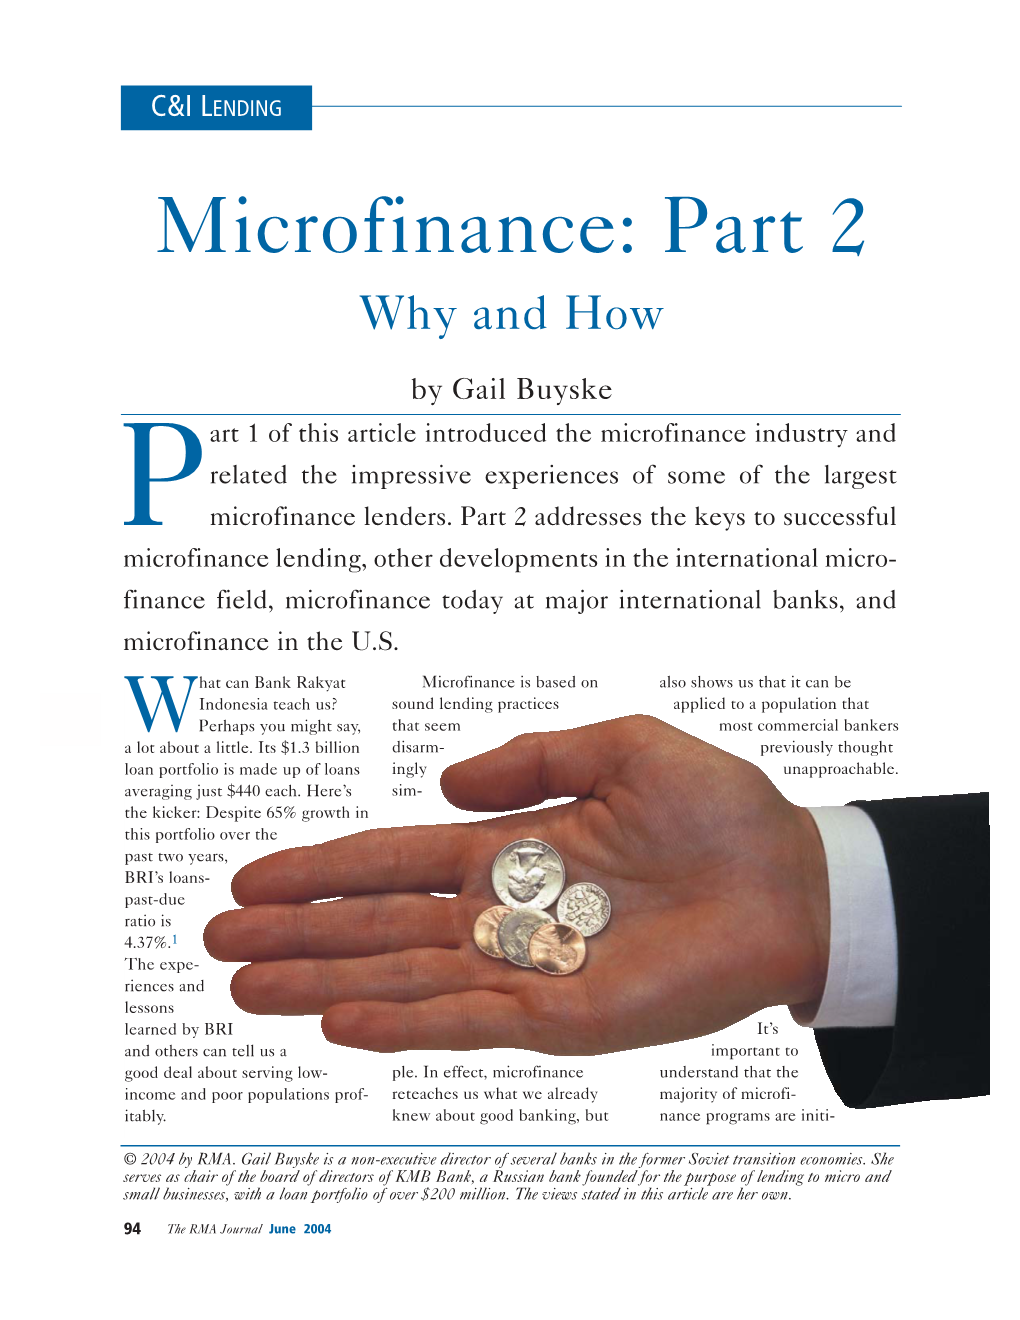 Microfinance Part 2